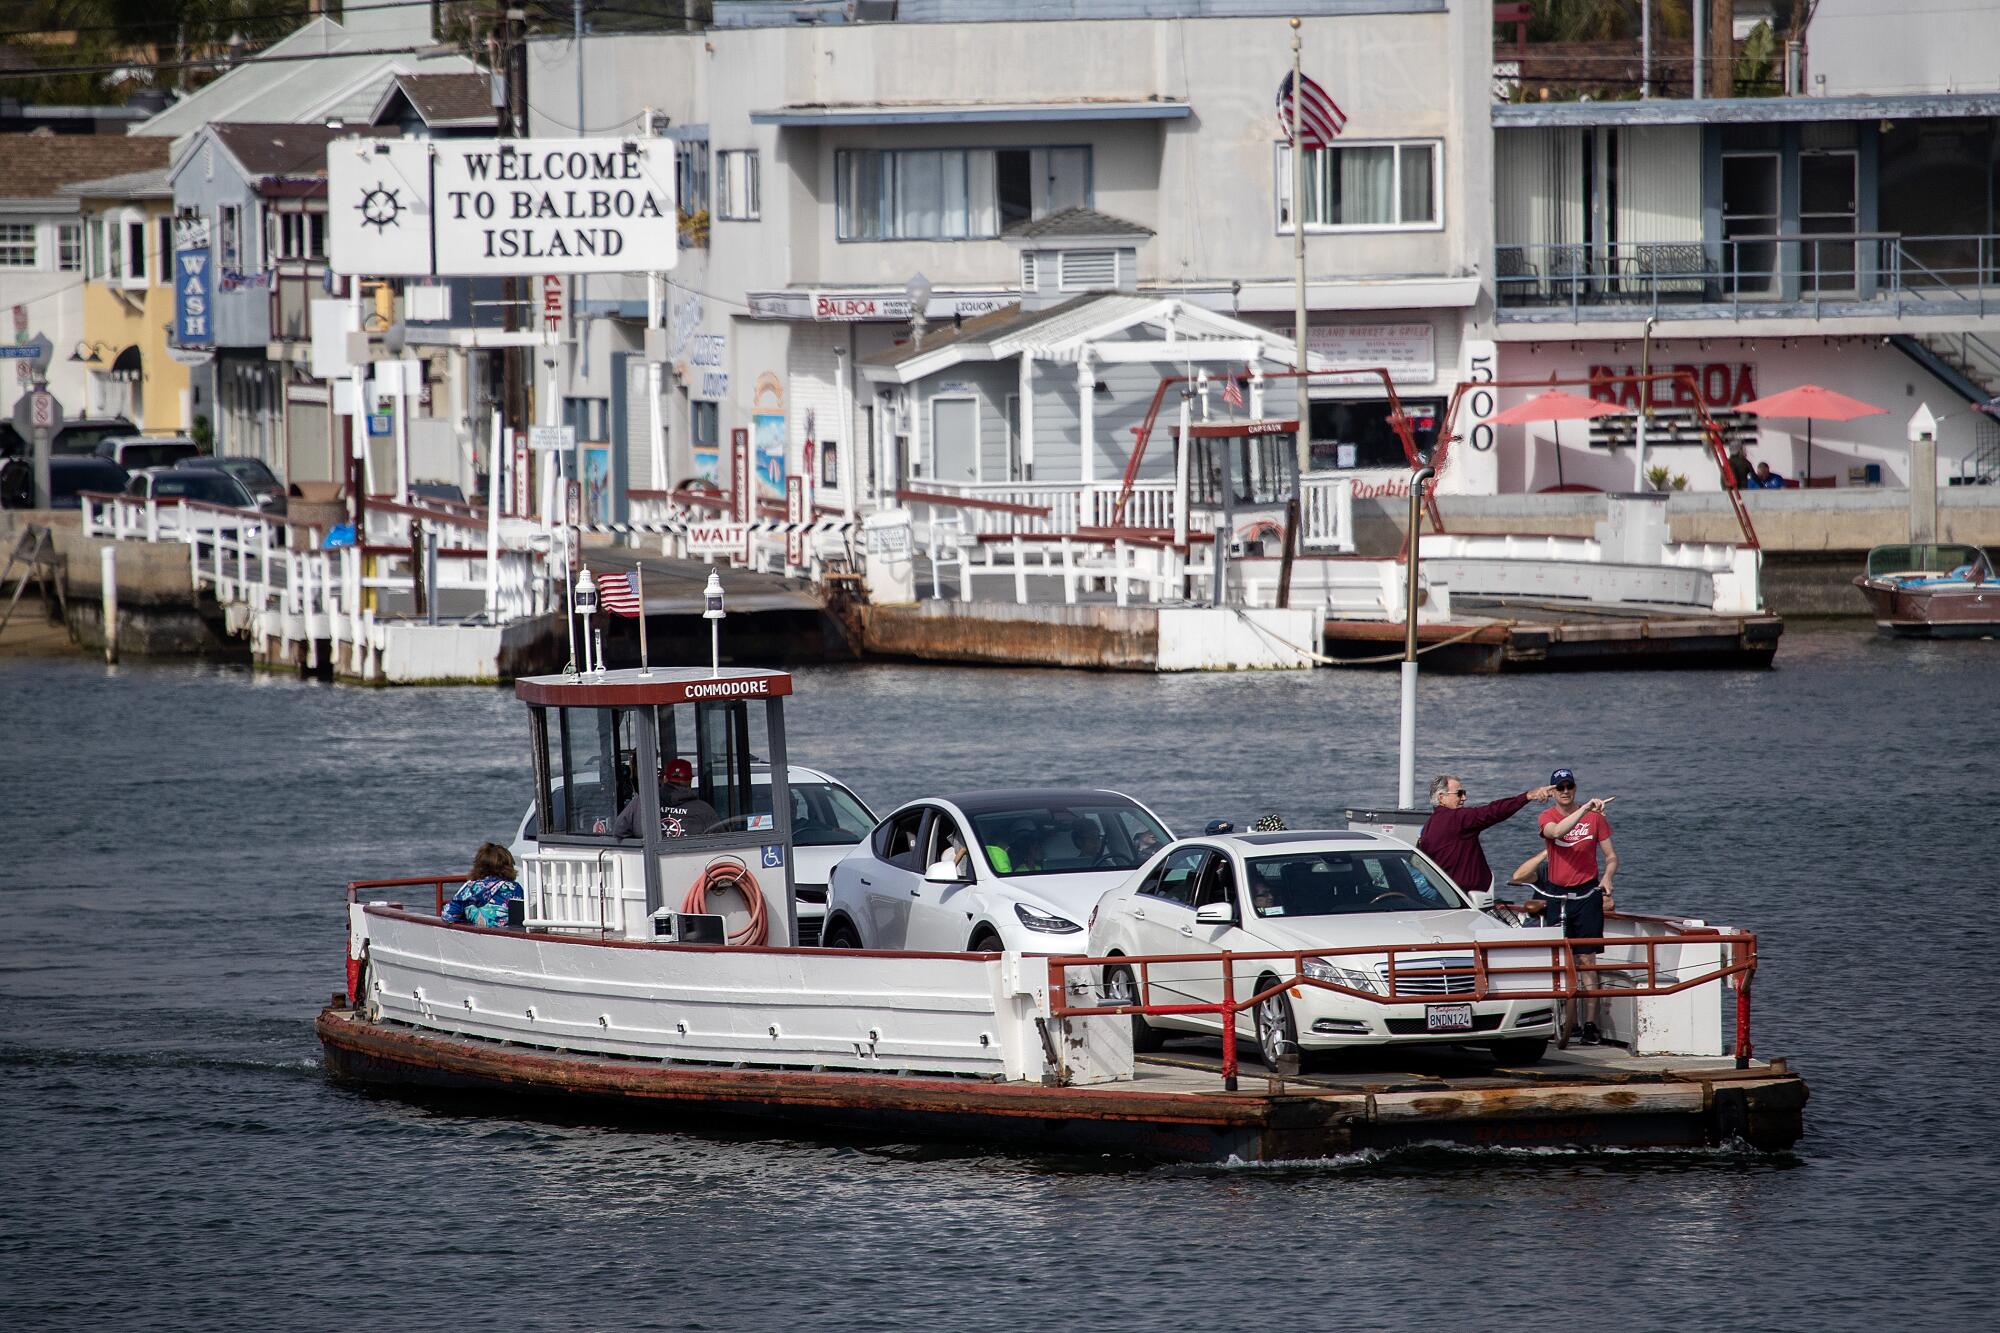 The Balboa Island Ferry travels from Balboa Island to the Newport Peninsula in Newport Beach.